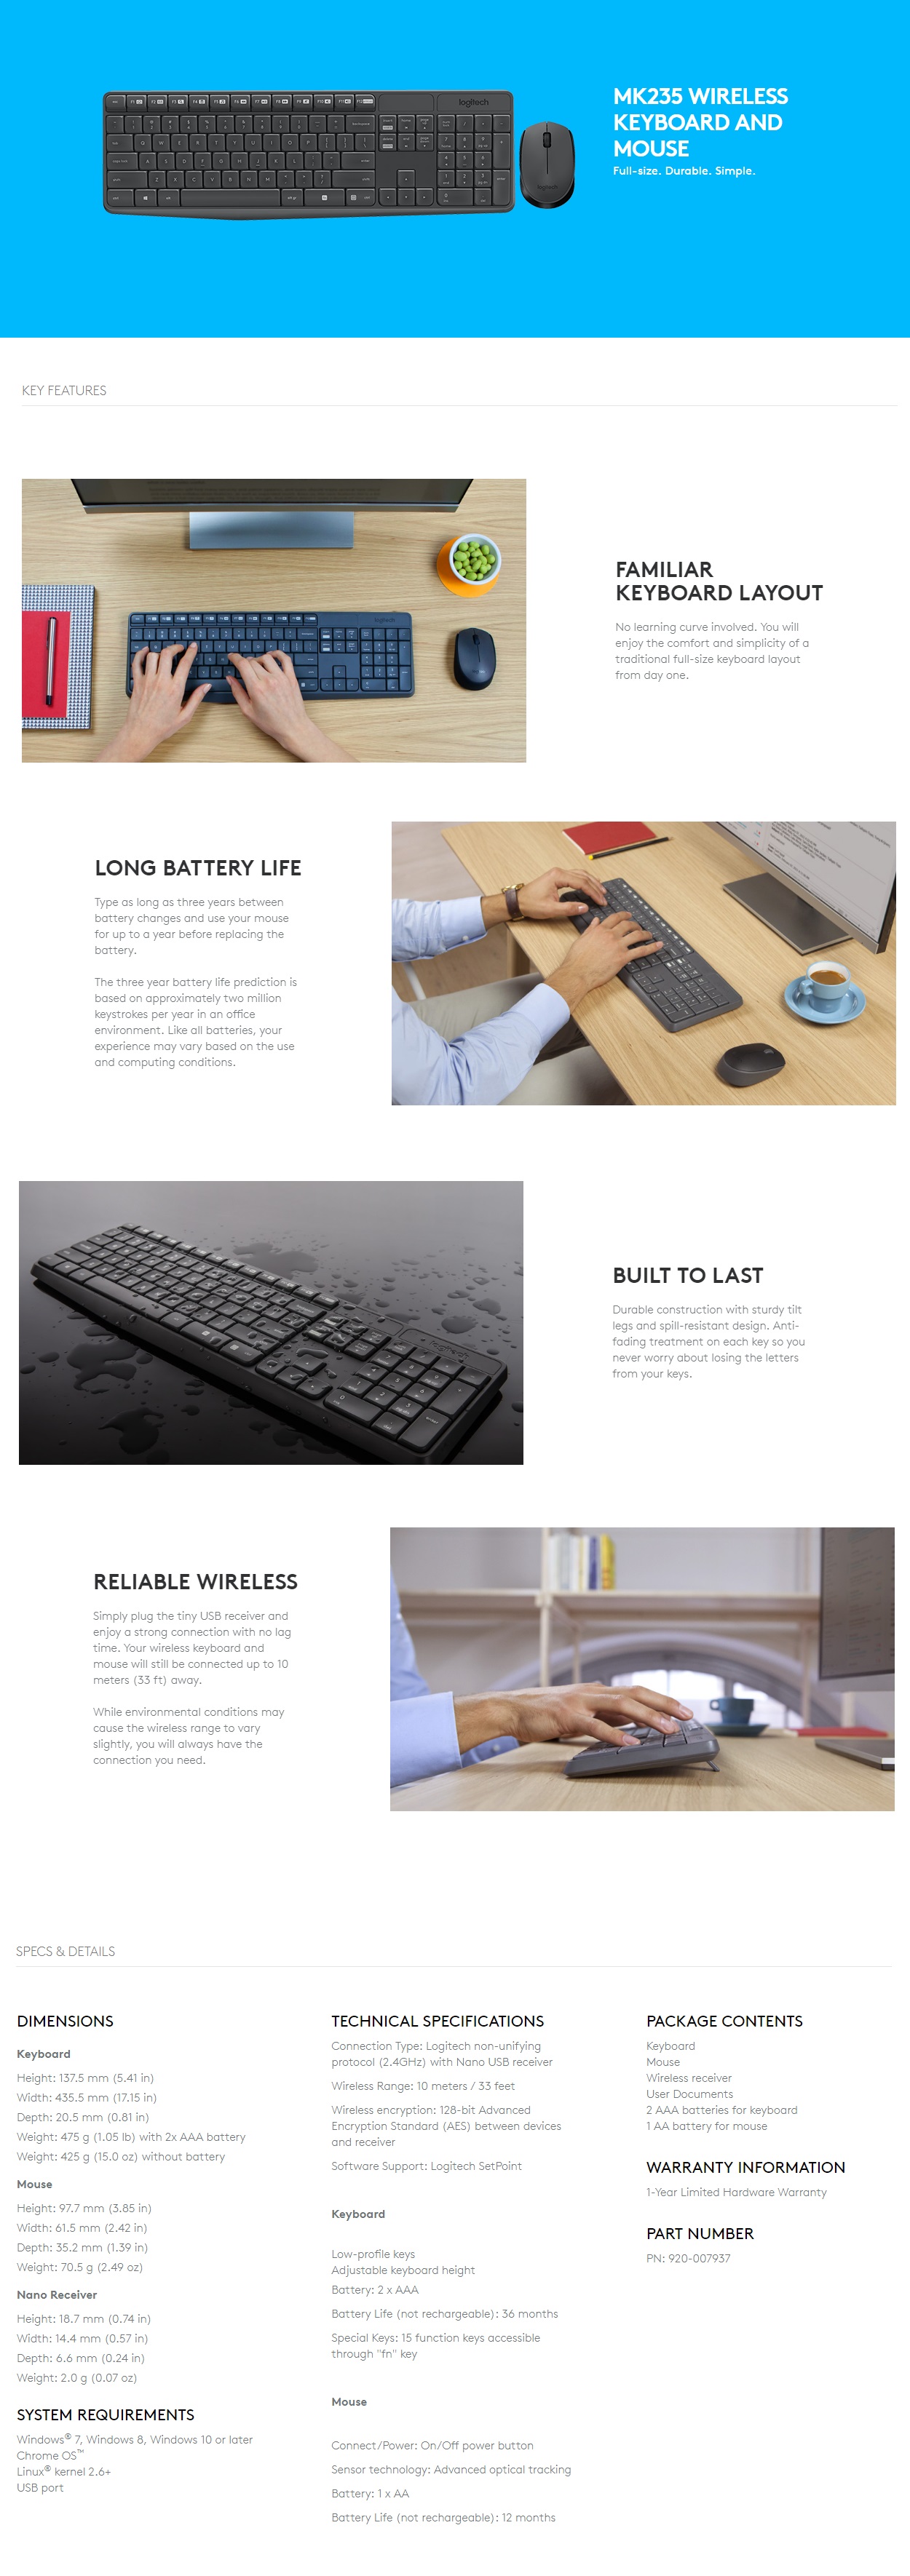  Keyboard & Mouse: MK235, Full-Size Wireless Combo - Black  